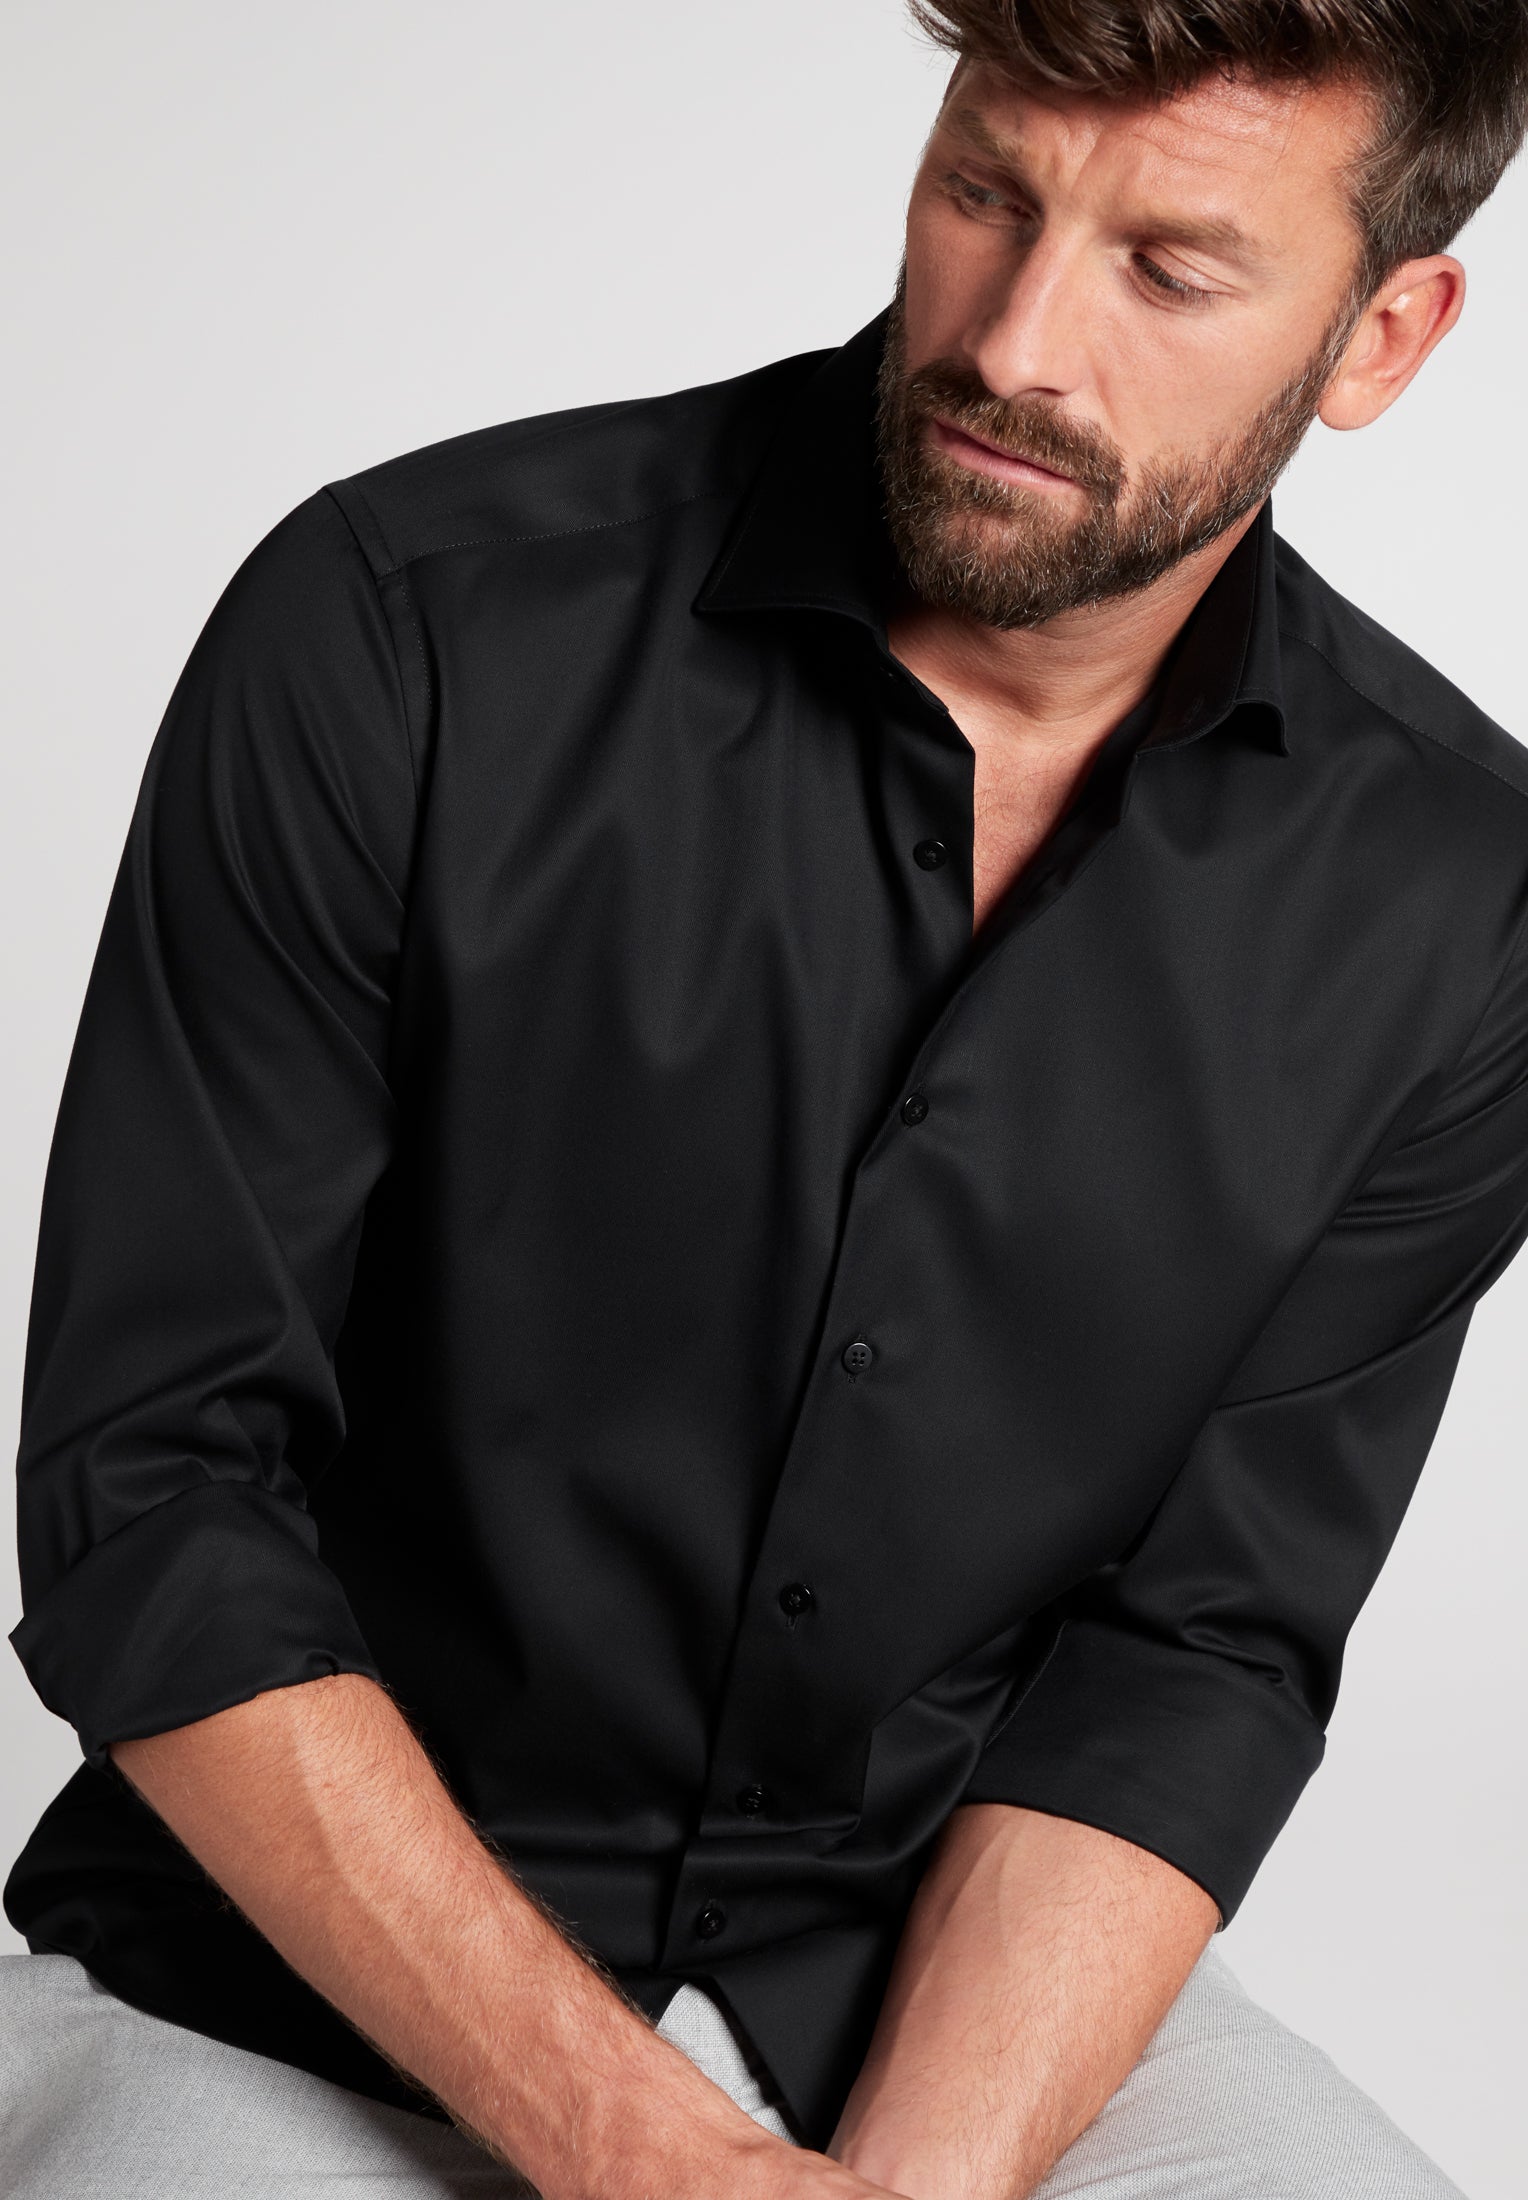 Eterna Langarm Hemd Modern Fit Cover Shirt Twill (Schwarz)